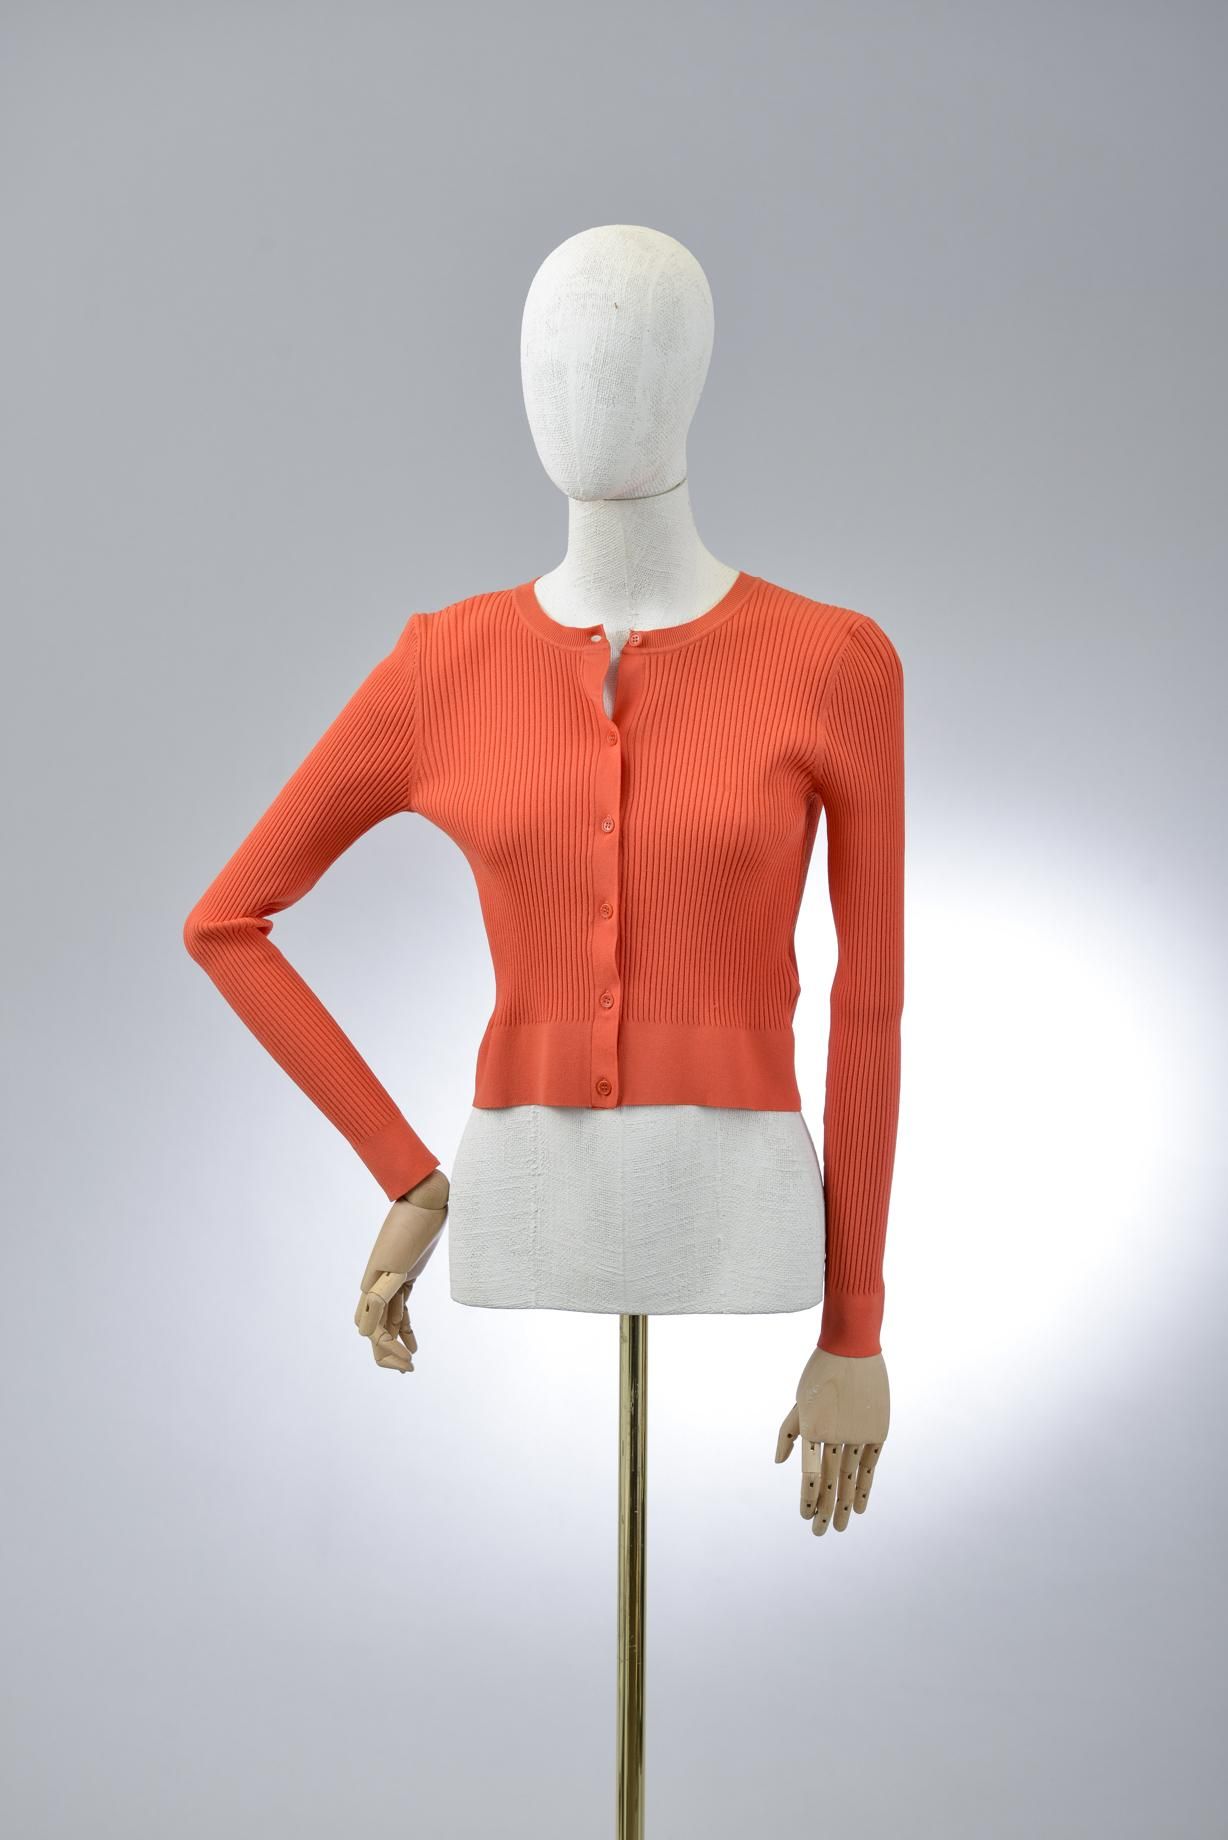 Null *尺寸XXS DVF - Diane Von Fürstenberg

套装包括。

-超薄粘胶针织开衫，型号为 "DVF Tammy"，纯橙色 "红&hellip;